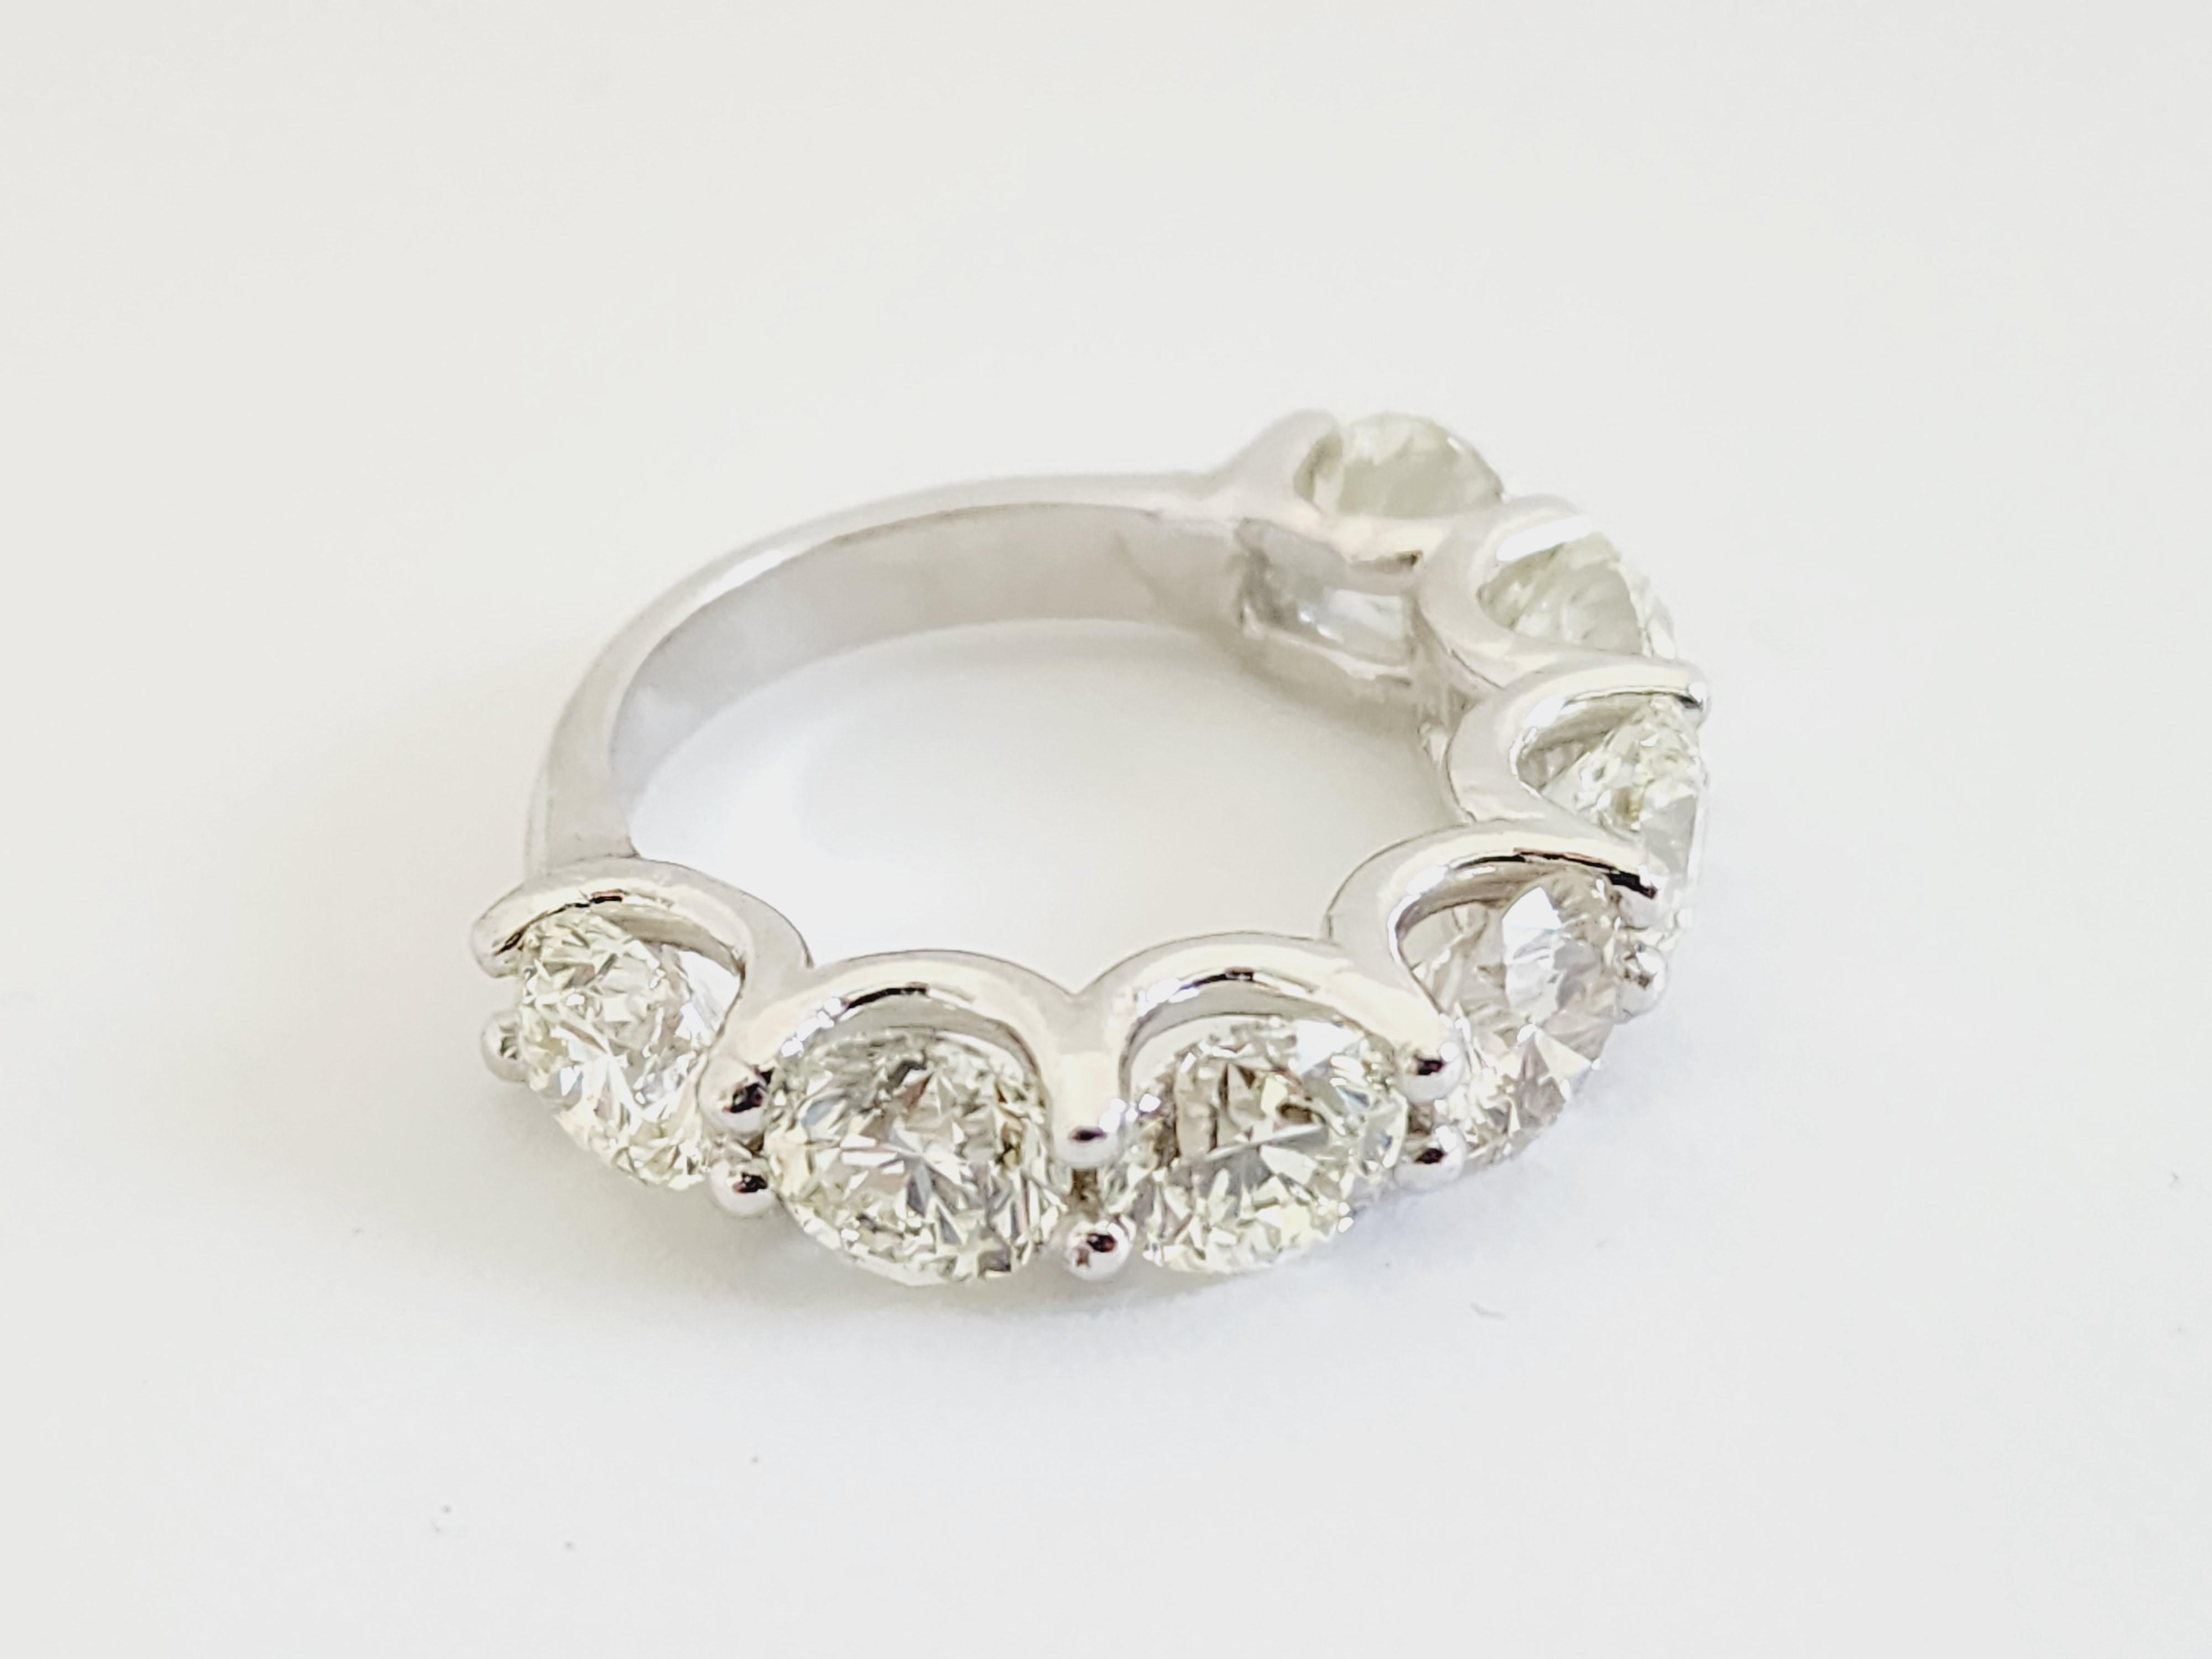 Beautiful 5.60 Carats Diamond Band White Gold 14 Karat, 
7 Pieces of Natural Diamonds, Average I-J Color Clarity VVS,
Ring Size 6